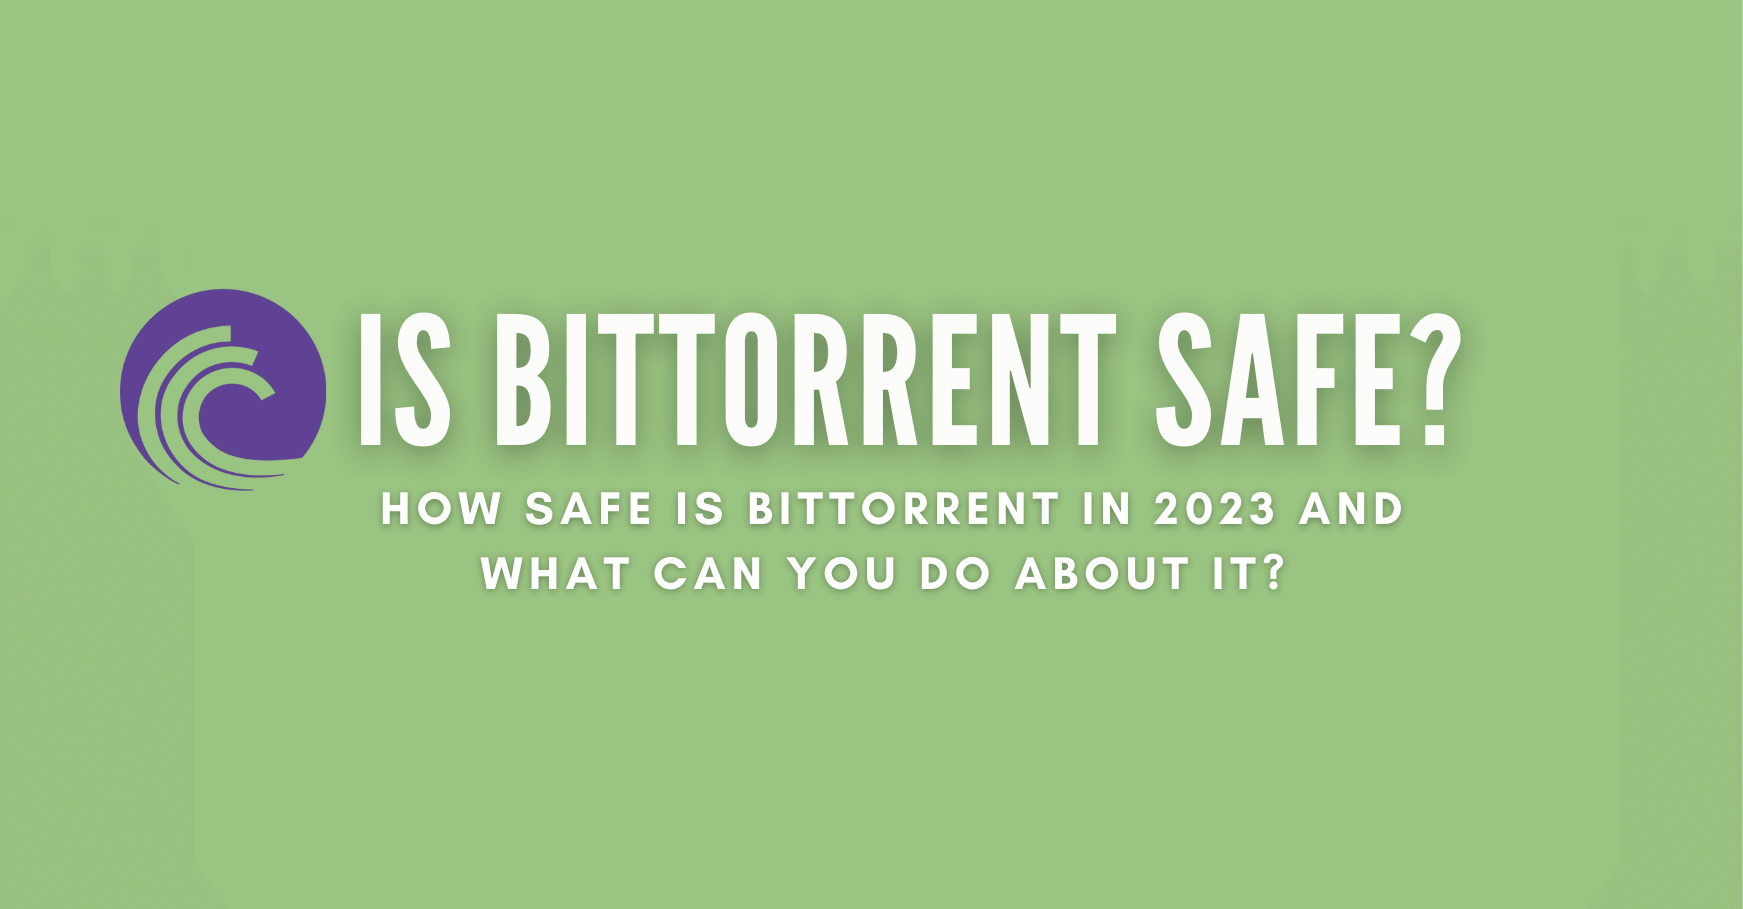 is bittorrent safe?